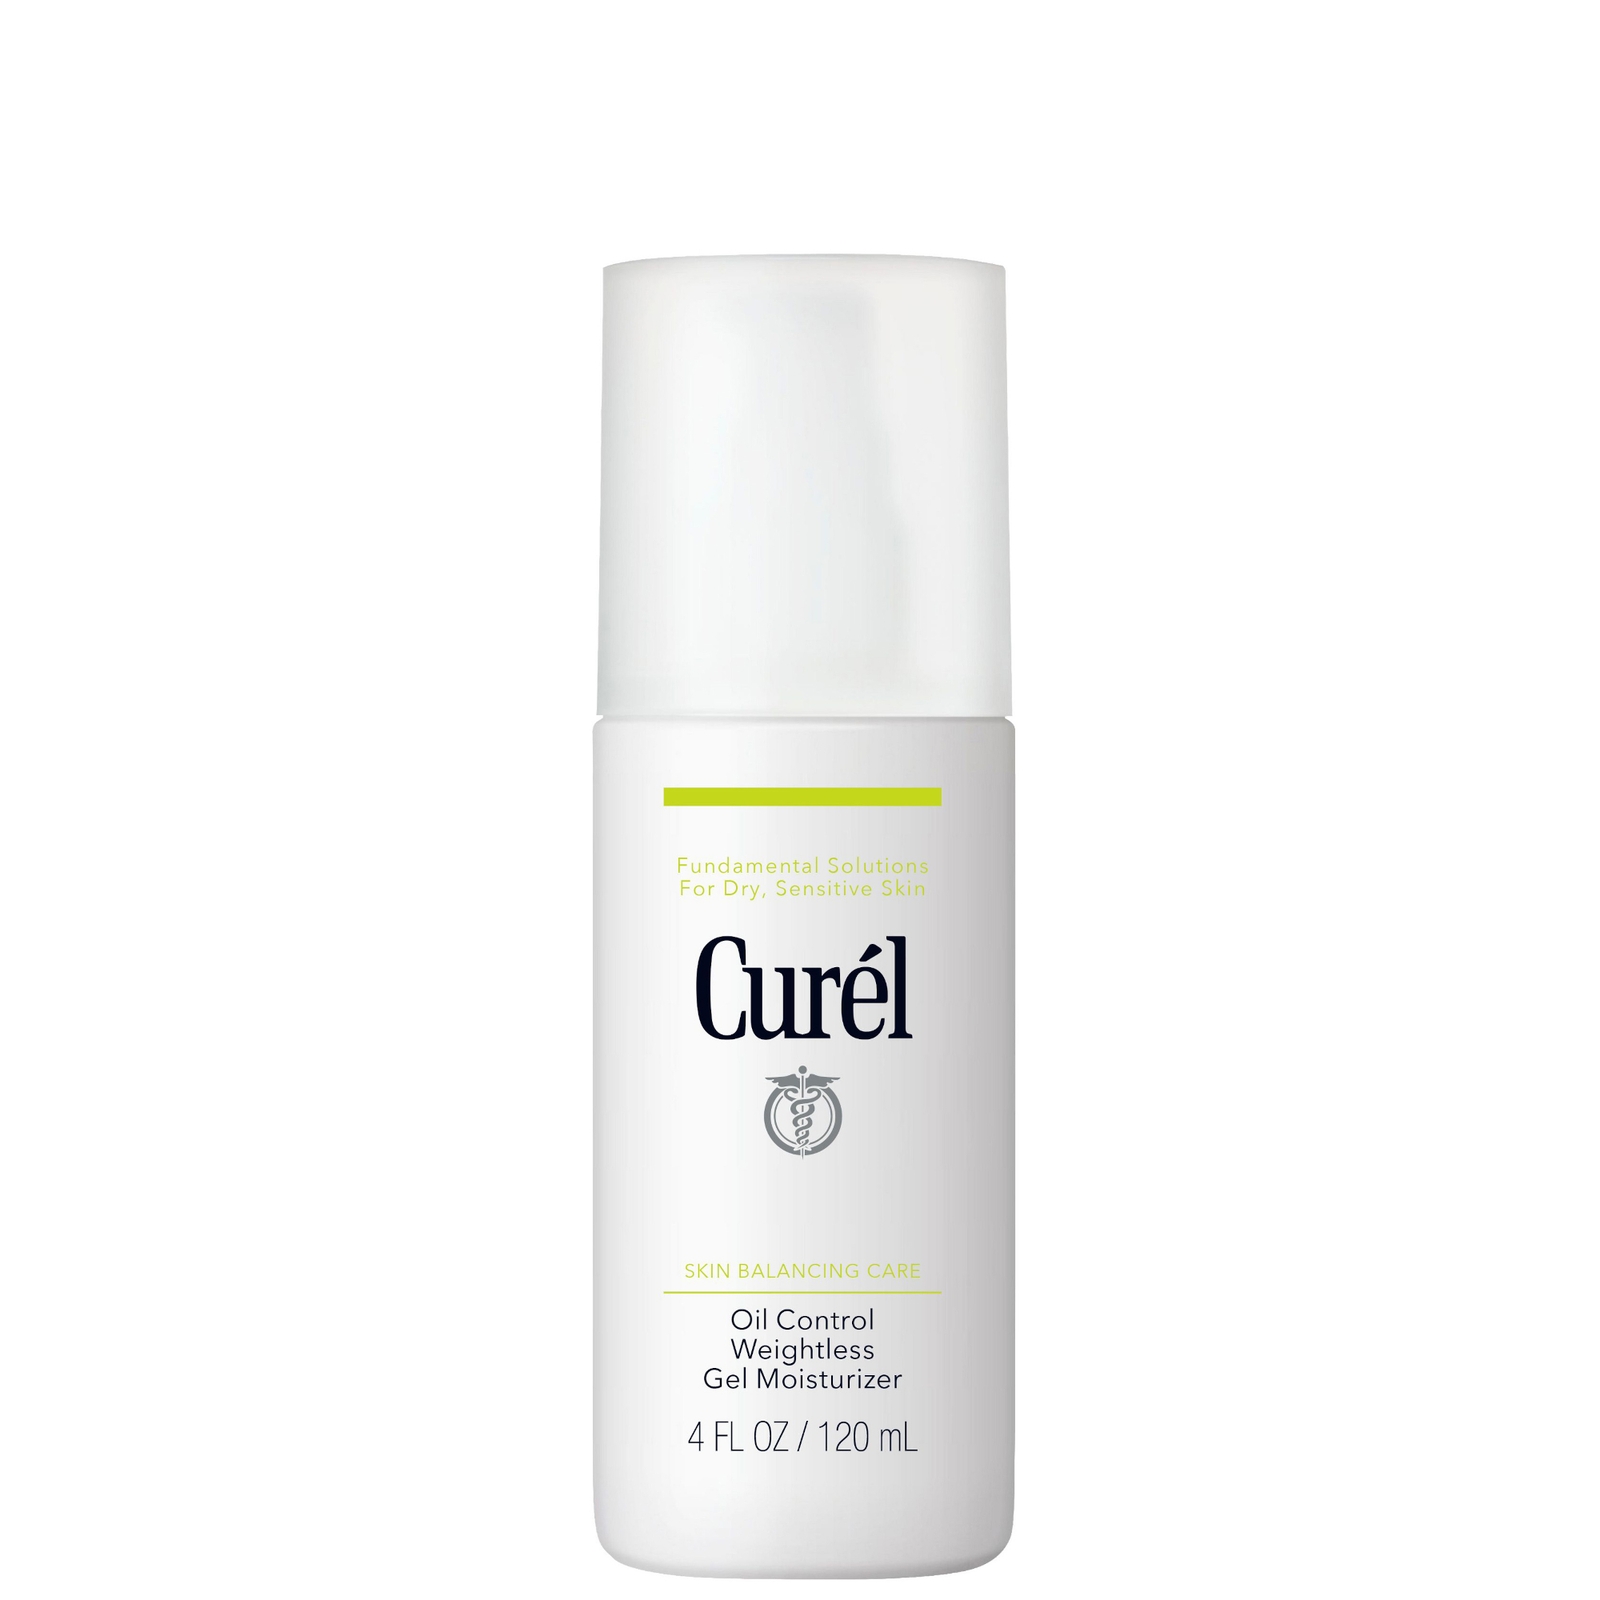 Image of Curél Skin Balancing Care Oil Control Weightless Moisturising Gel for Sensitive Skin 120ml